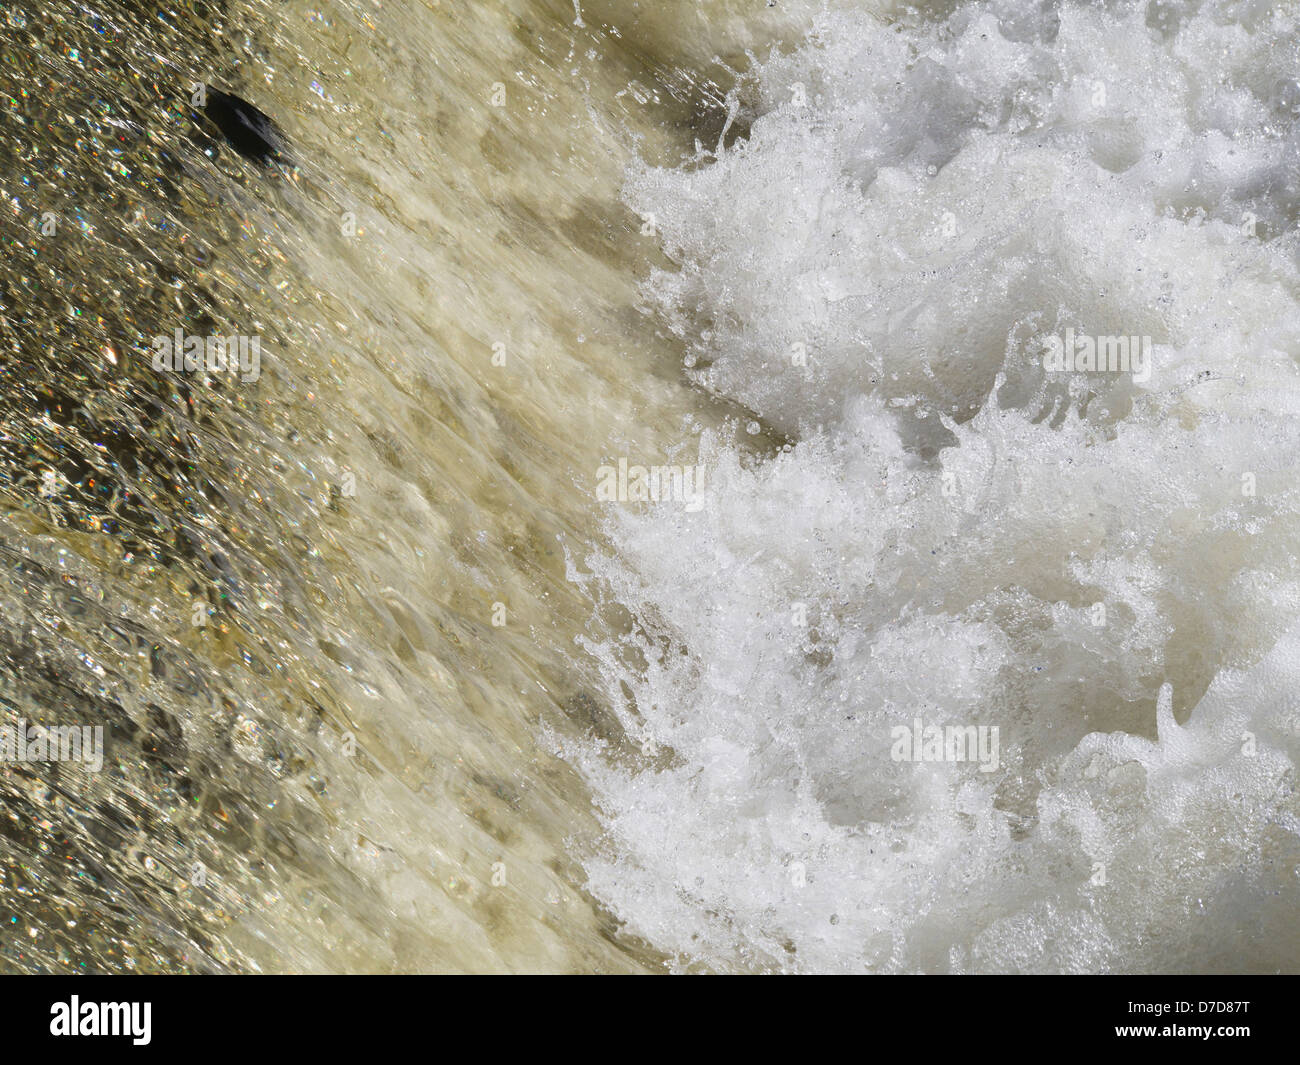 rushing, foaming, bubbling river water in a cascading waterfall Stock Photo